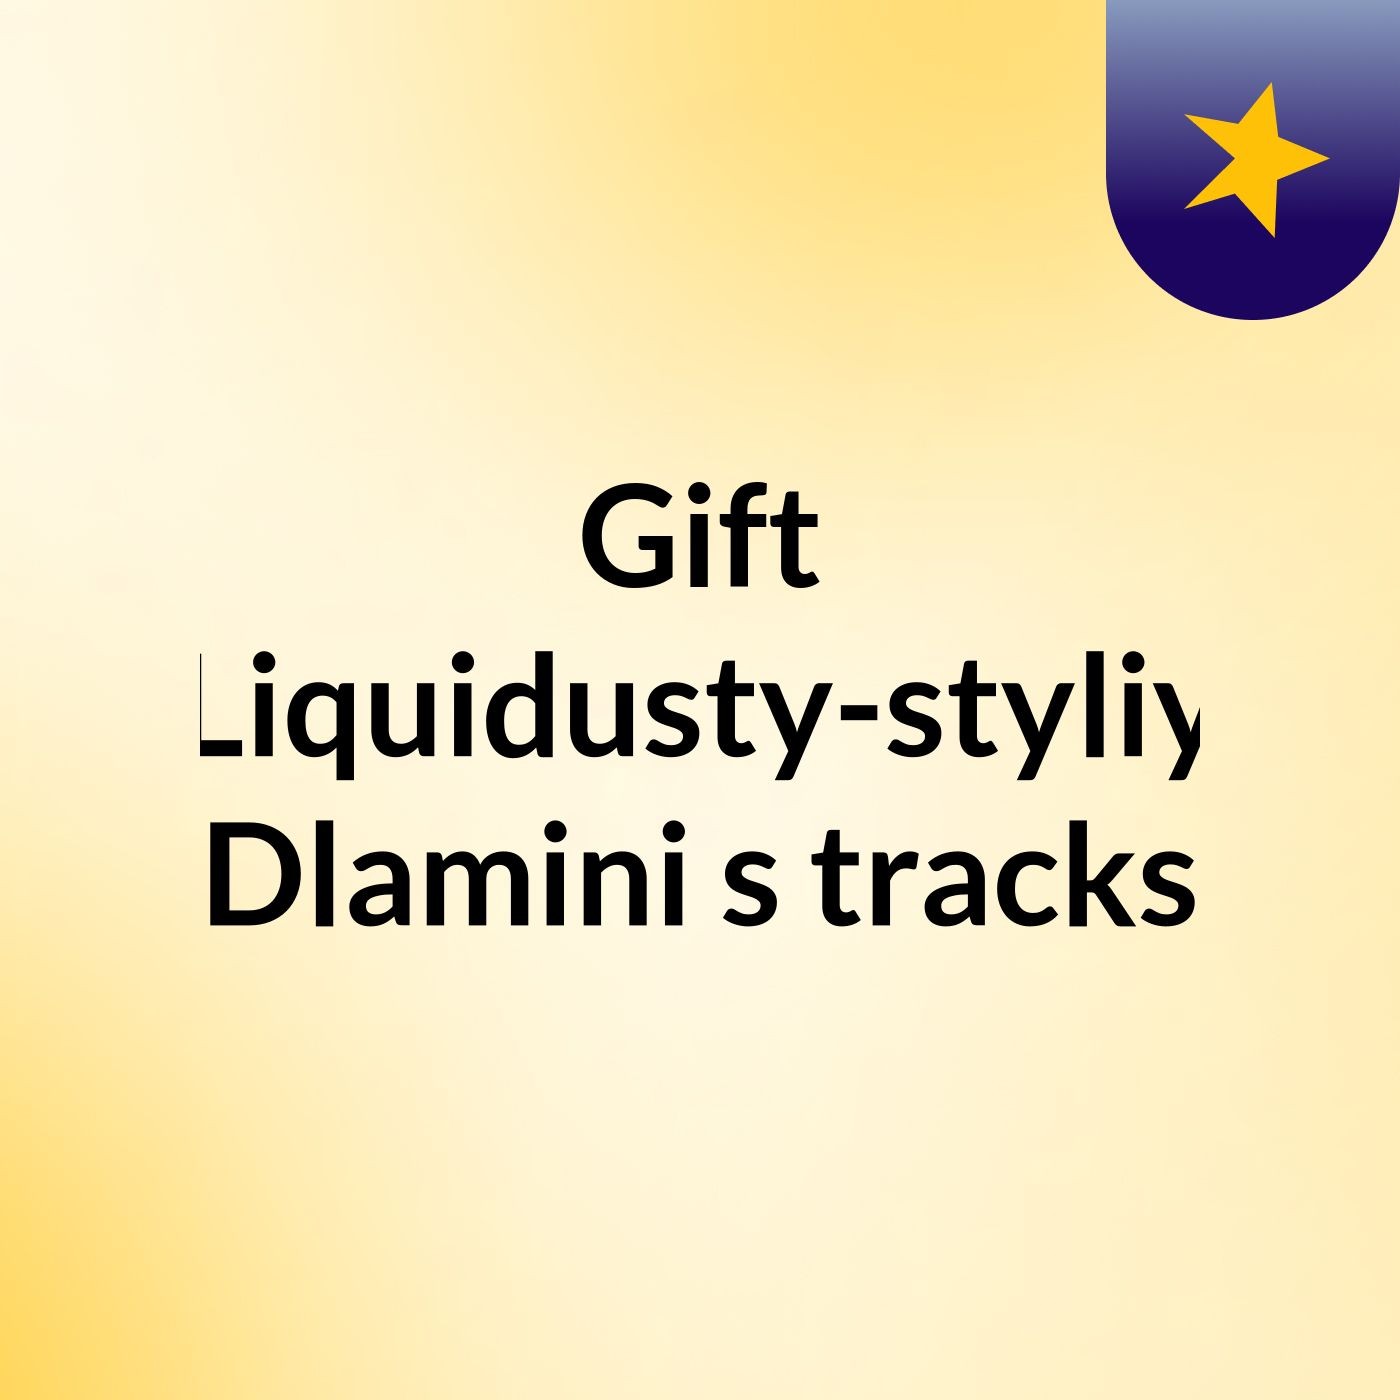 Gift Liquidusty-styliy Dlamini's tracks